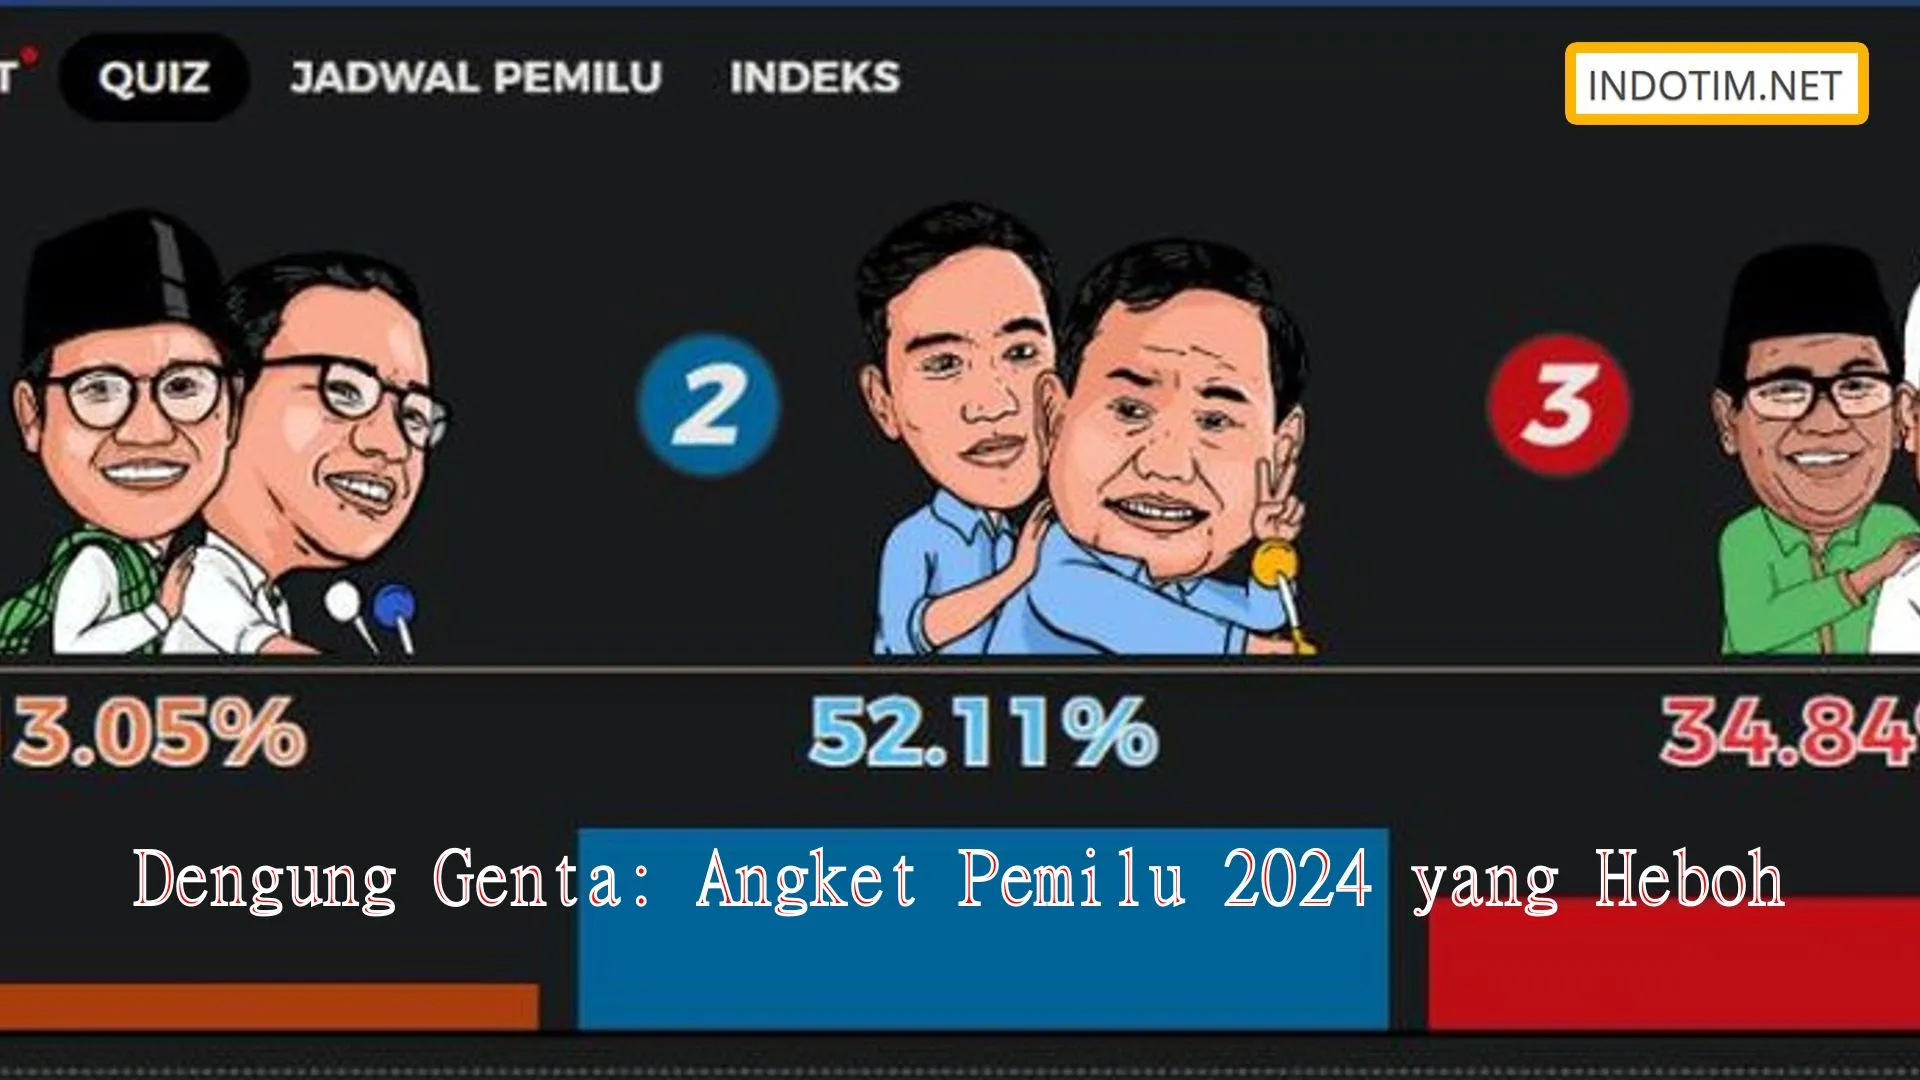 Dengung Genta: Angket Pemilu 2024 yang Heboh